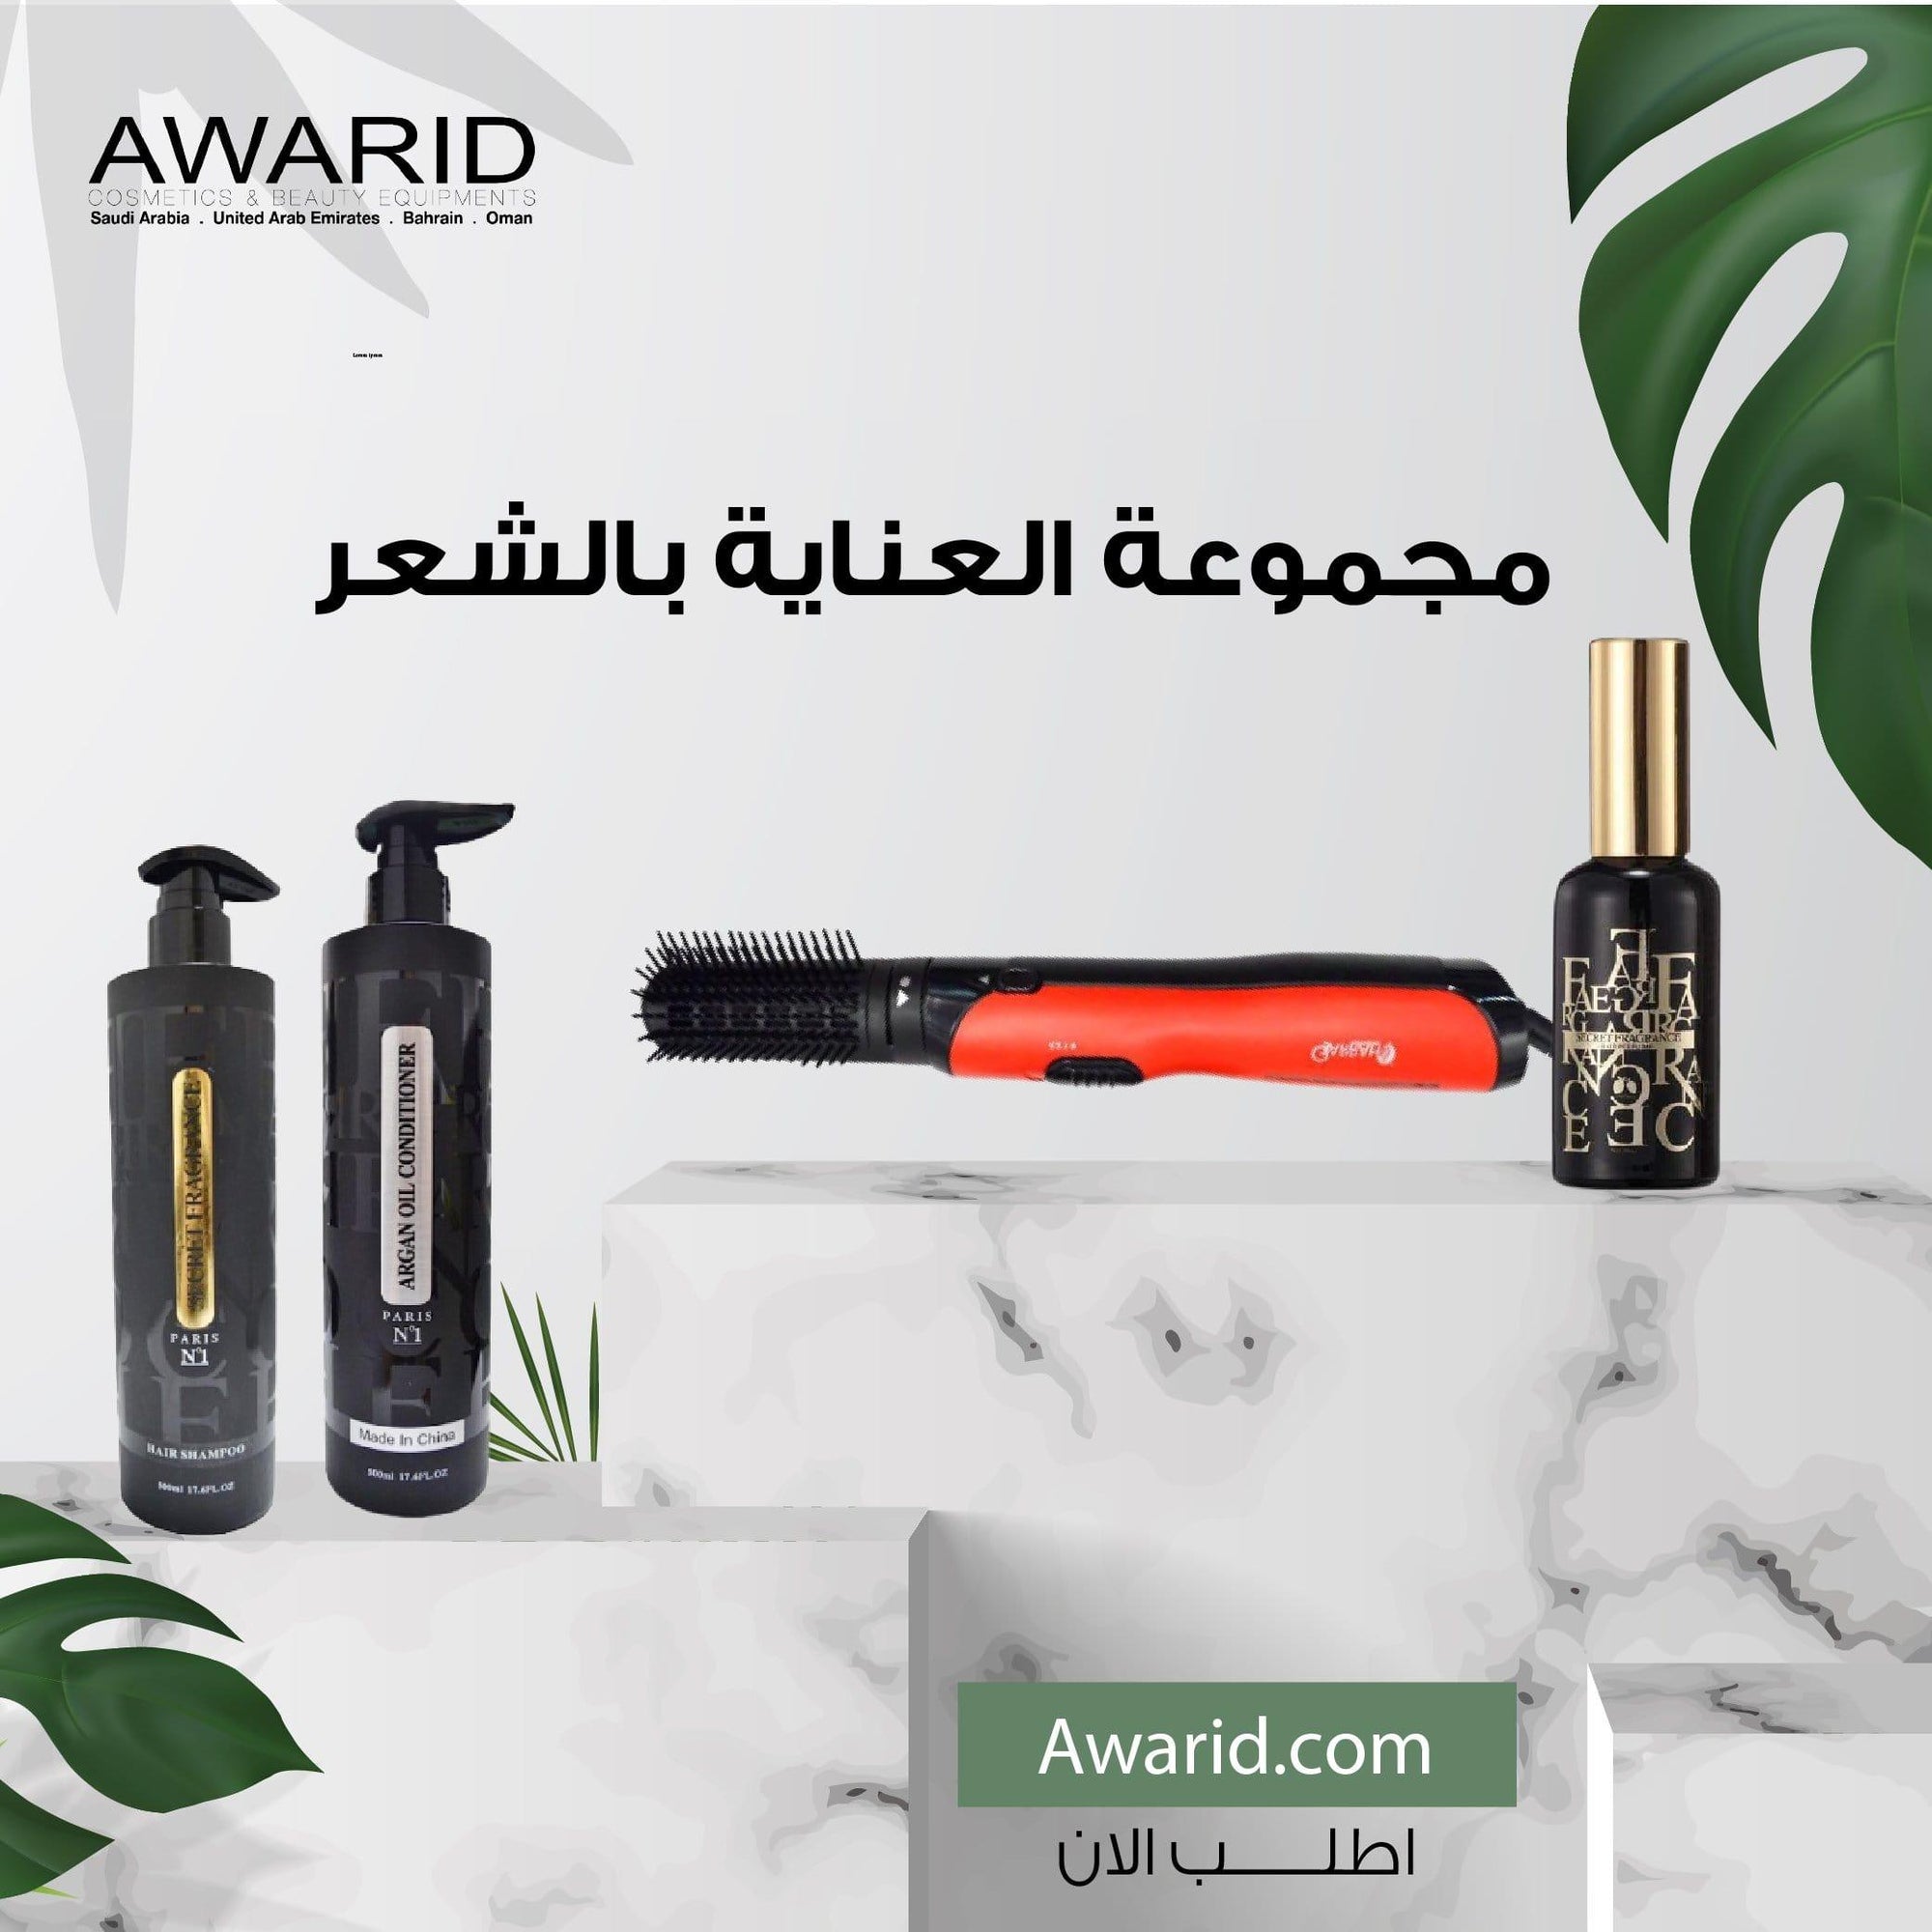 Gjarrah Professional Hair Styler & secret fragrance (shampoo , conditioner , serum) - Awarid UAE